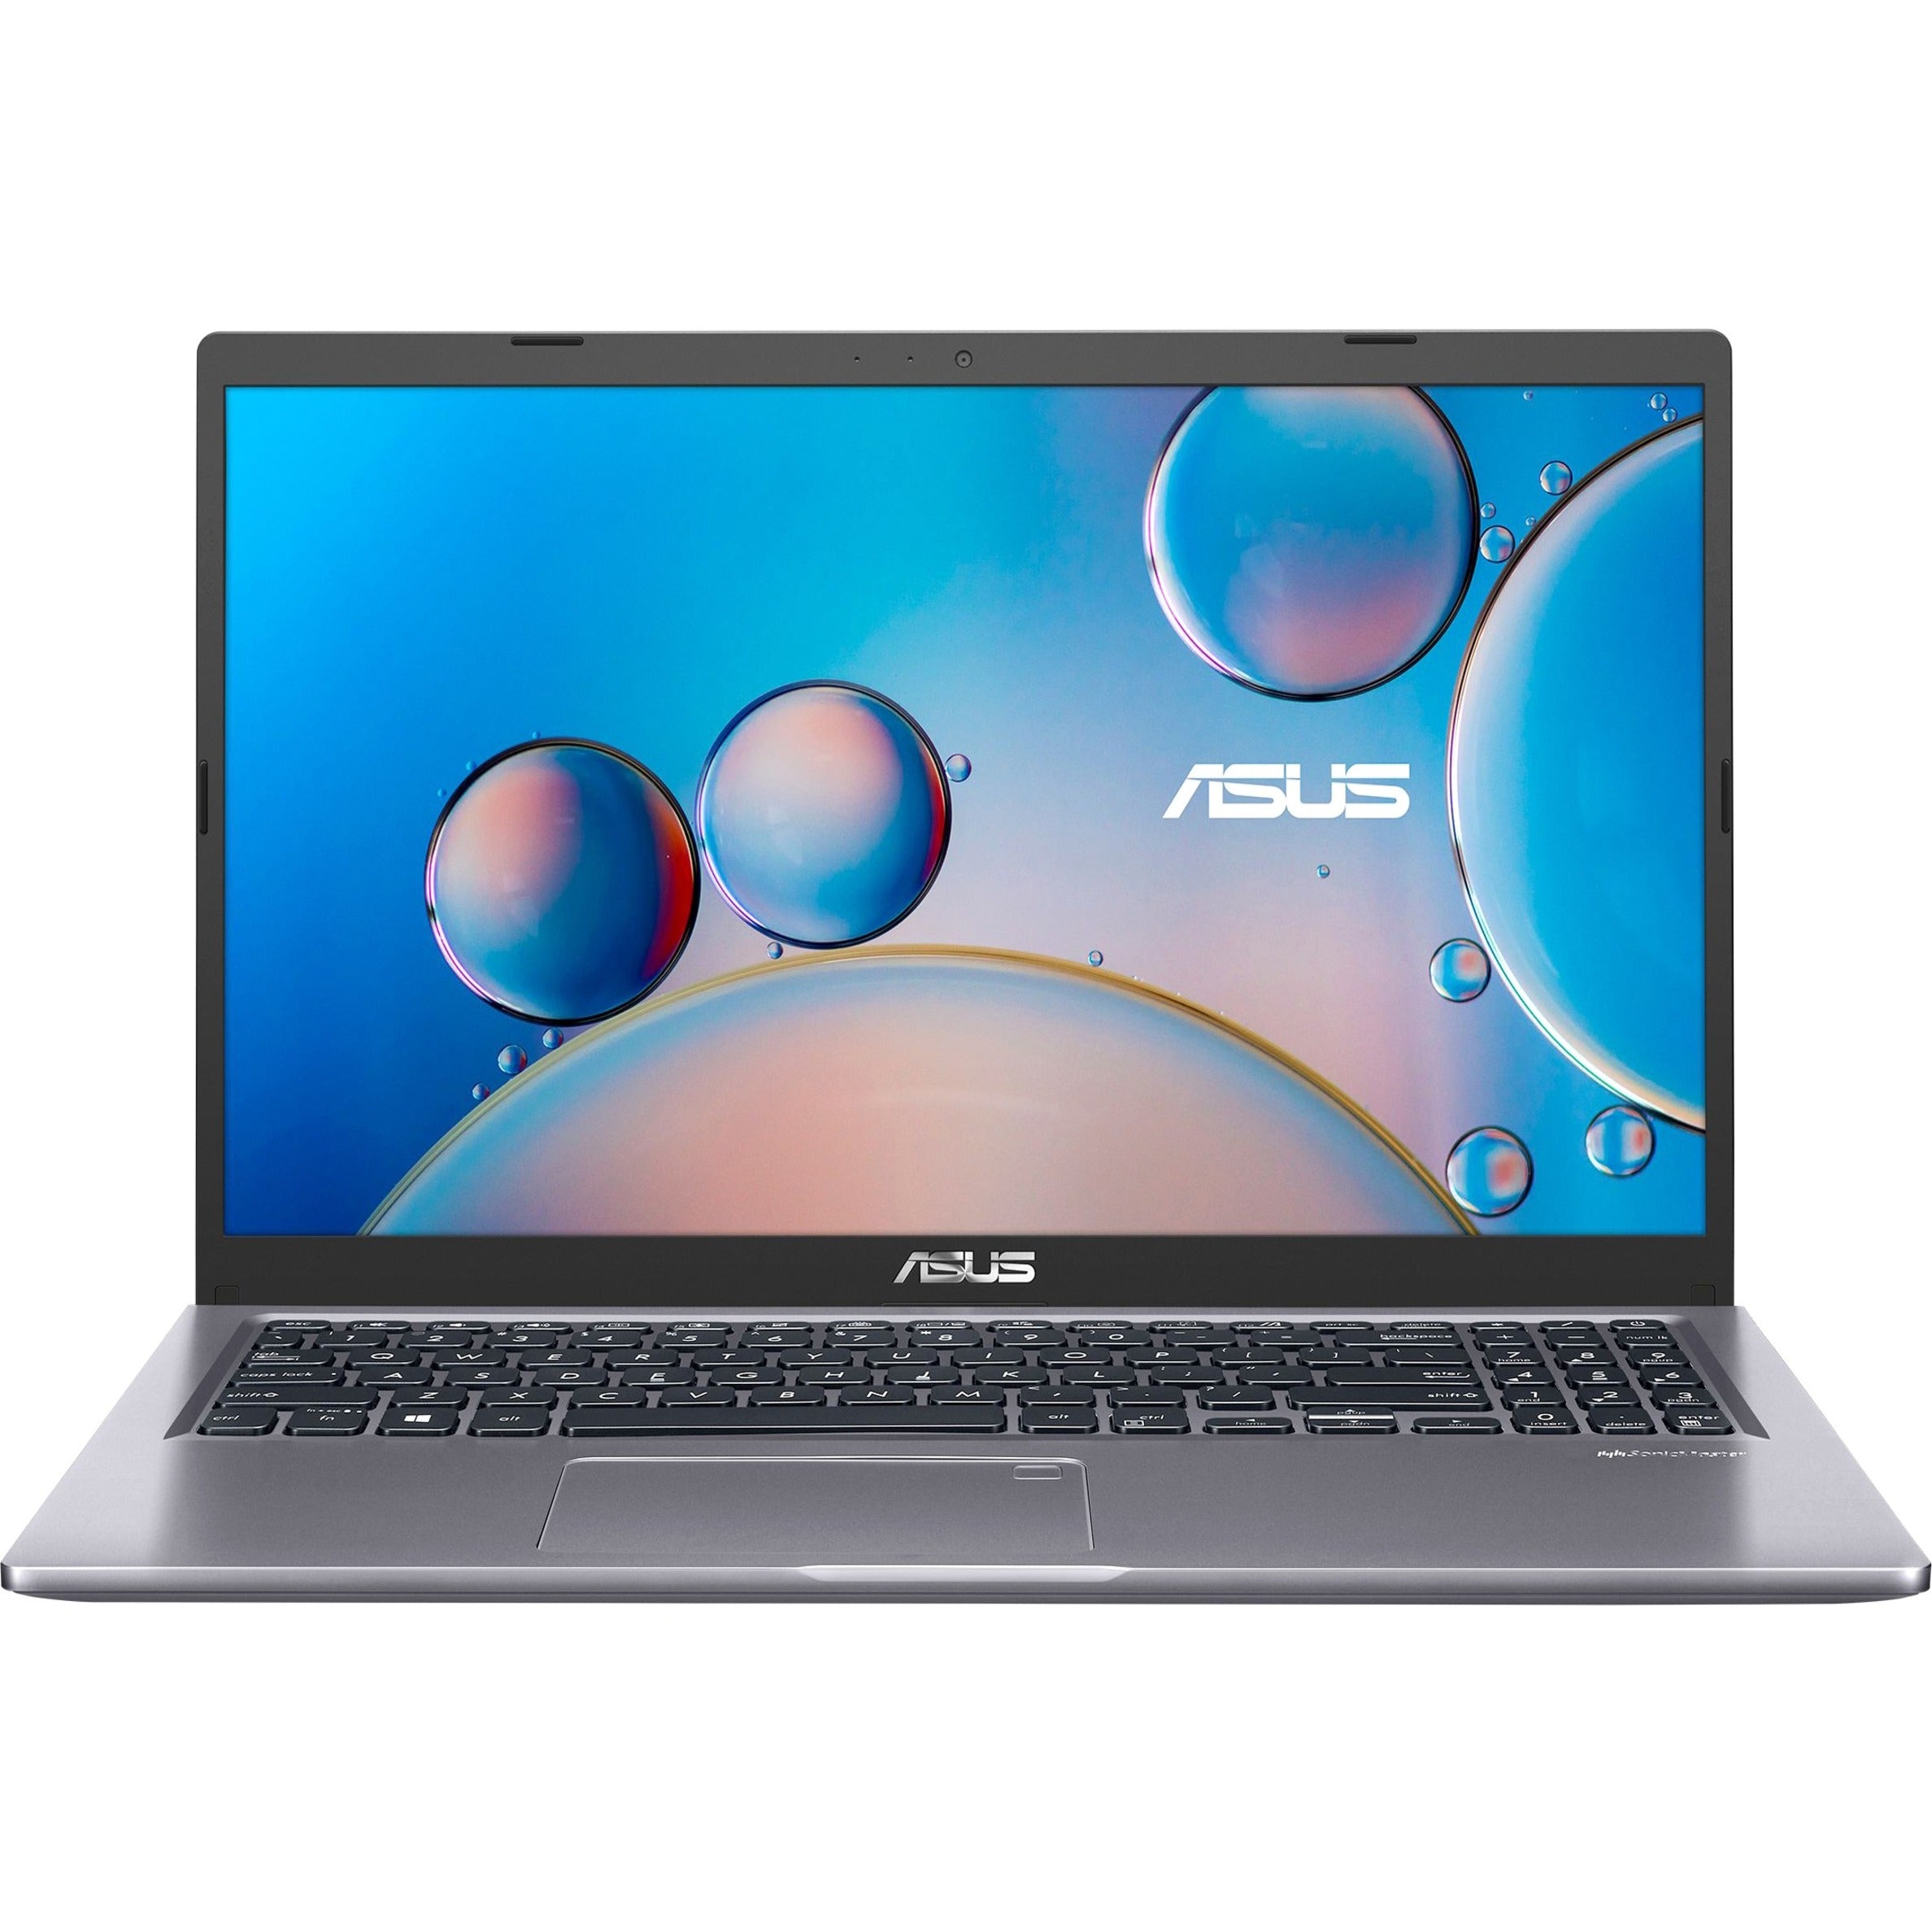 Asus F515EA-DH75 F515 Notebook, 15.6 Full HD, Intel Core i7, 8GB RAM, 512GB SSD, Slate Gray